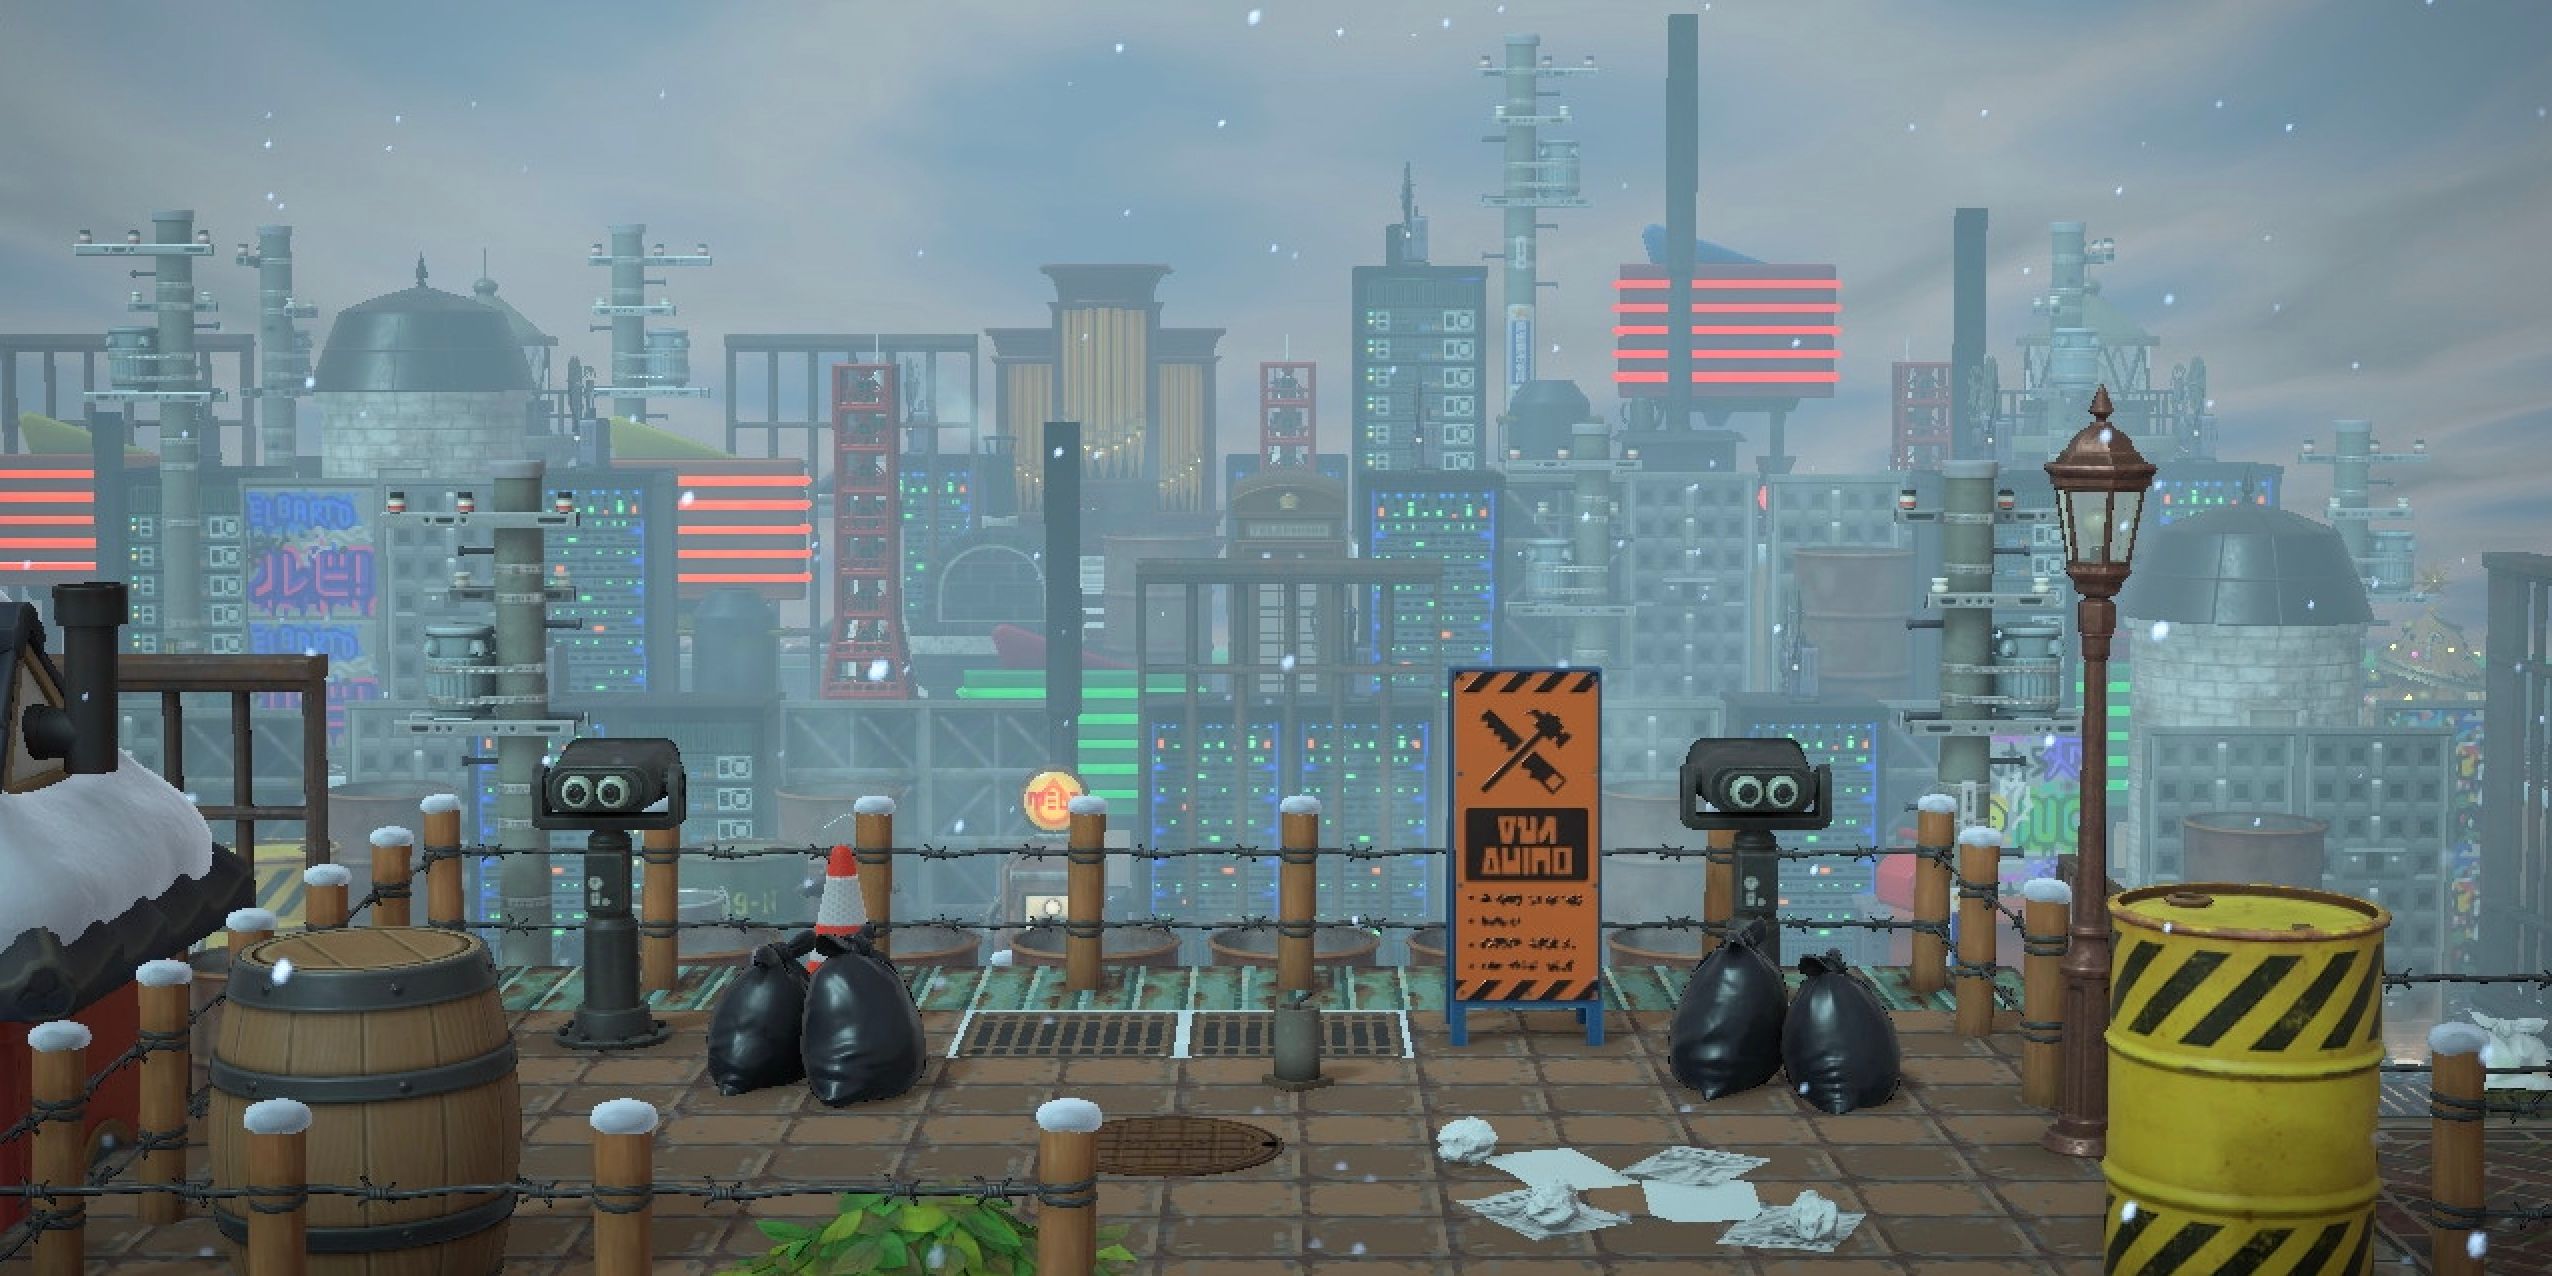 Rustic Industrial themed Animal Crossing dream island